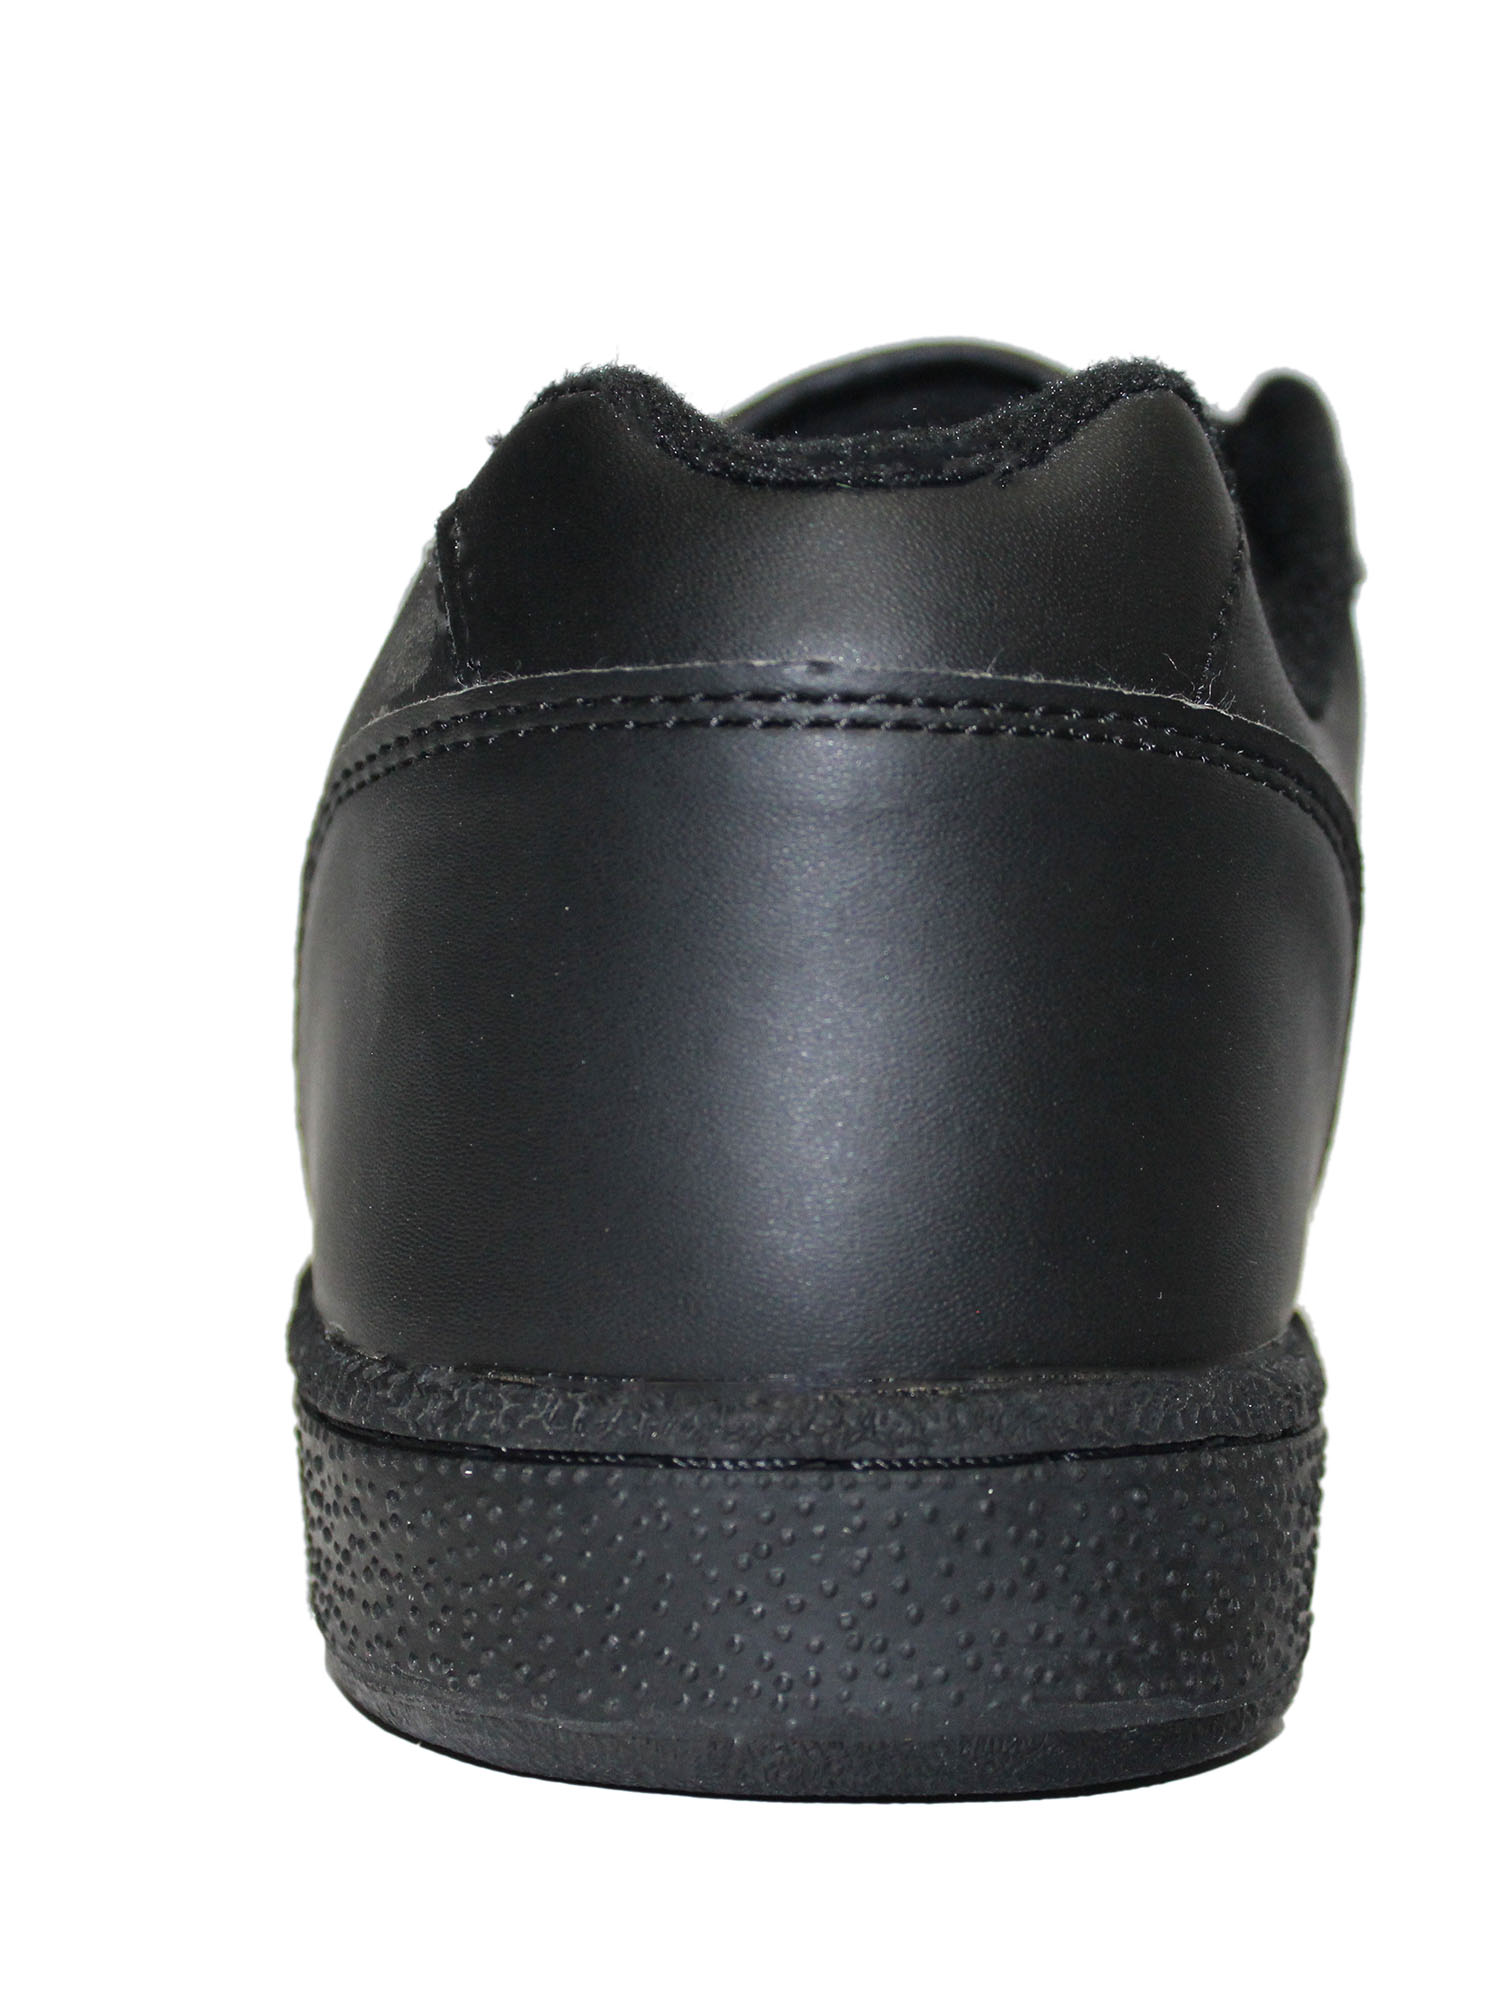 Tanleewa Men's Leather Strap Sneakers Lightweight Hook and Loop Walking Shoe Size 7.5 Adult Male - image 4 of 4